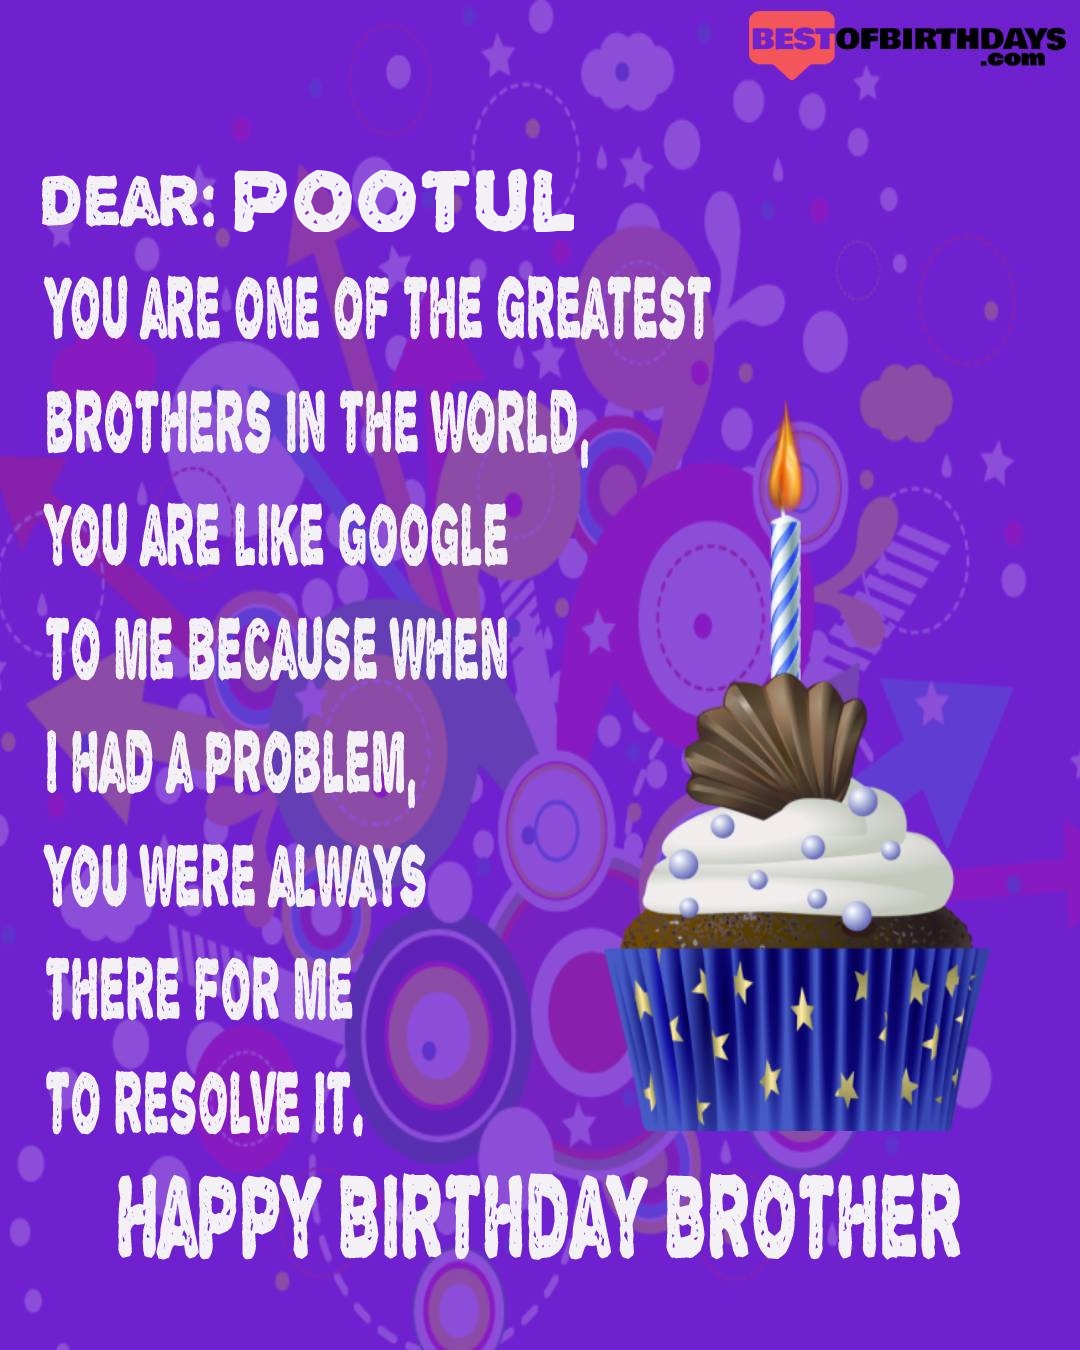 Happy birthday pootul bhai brother bro